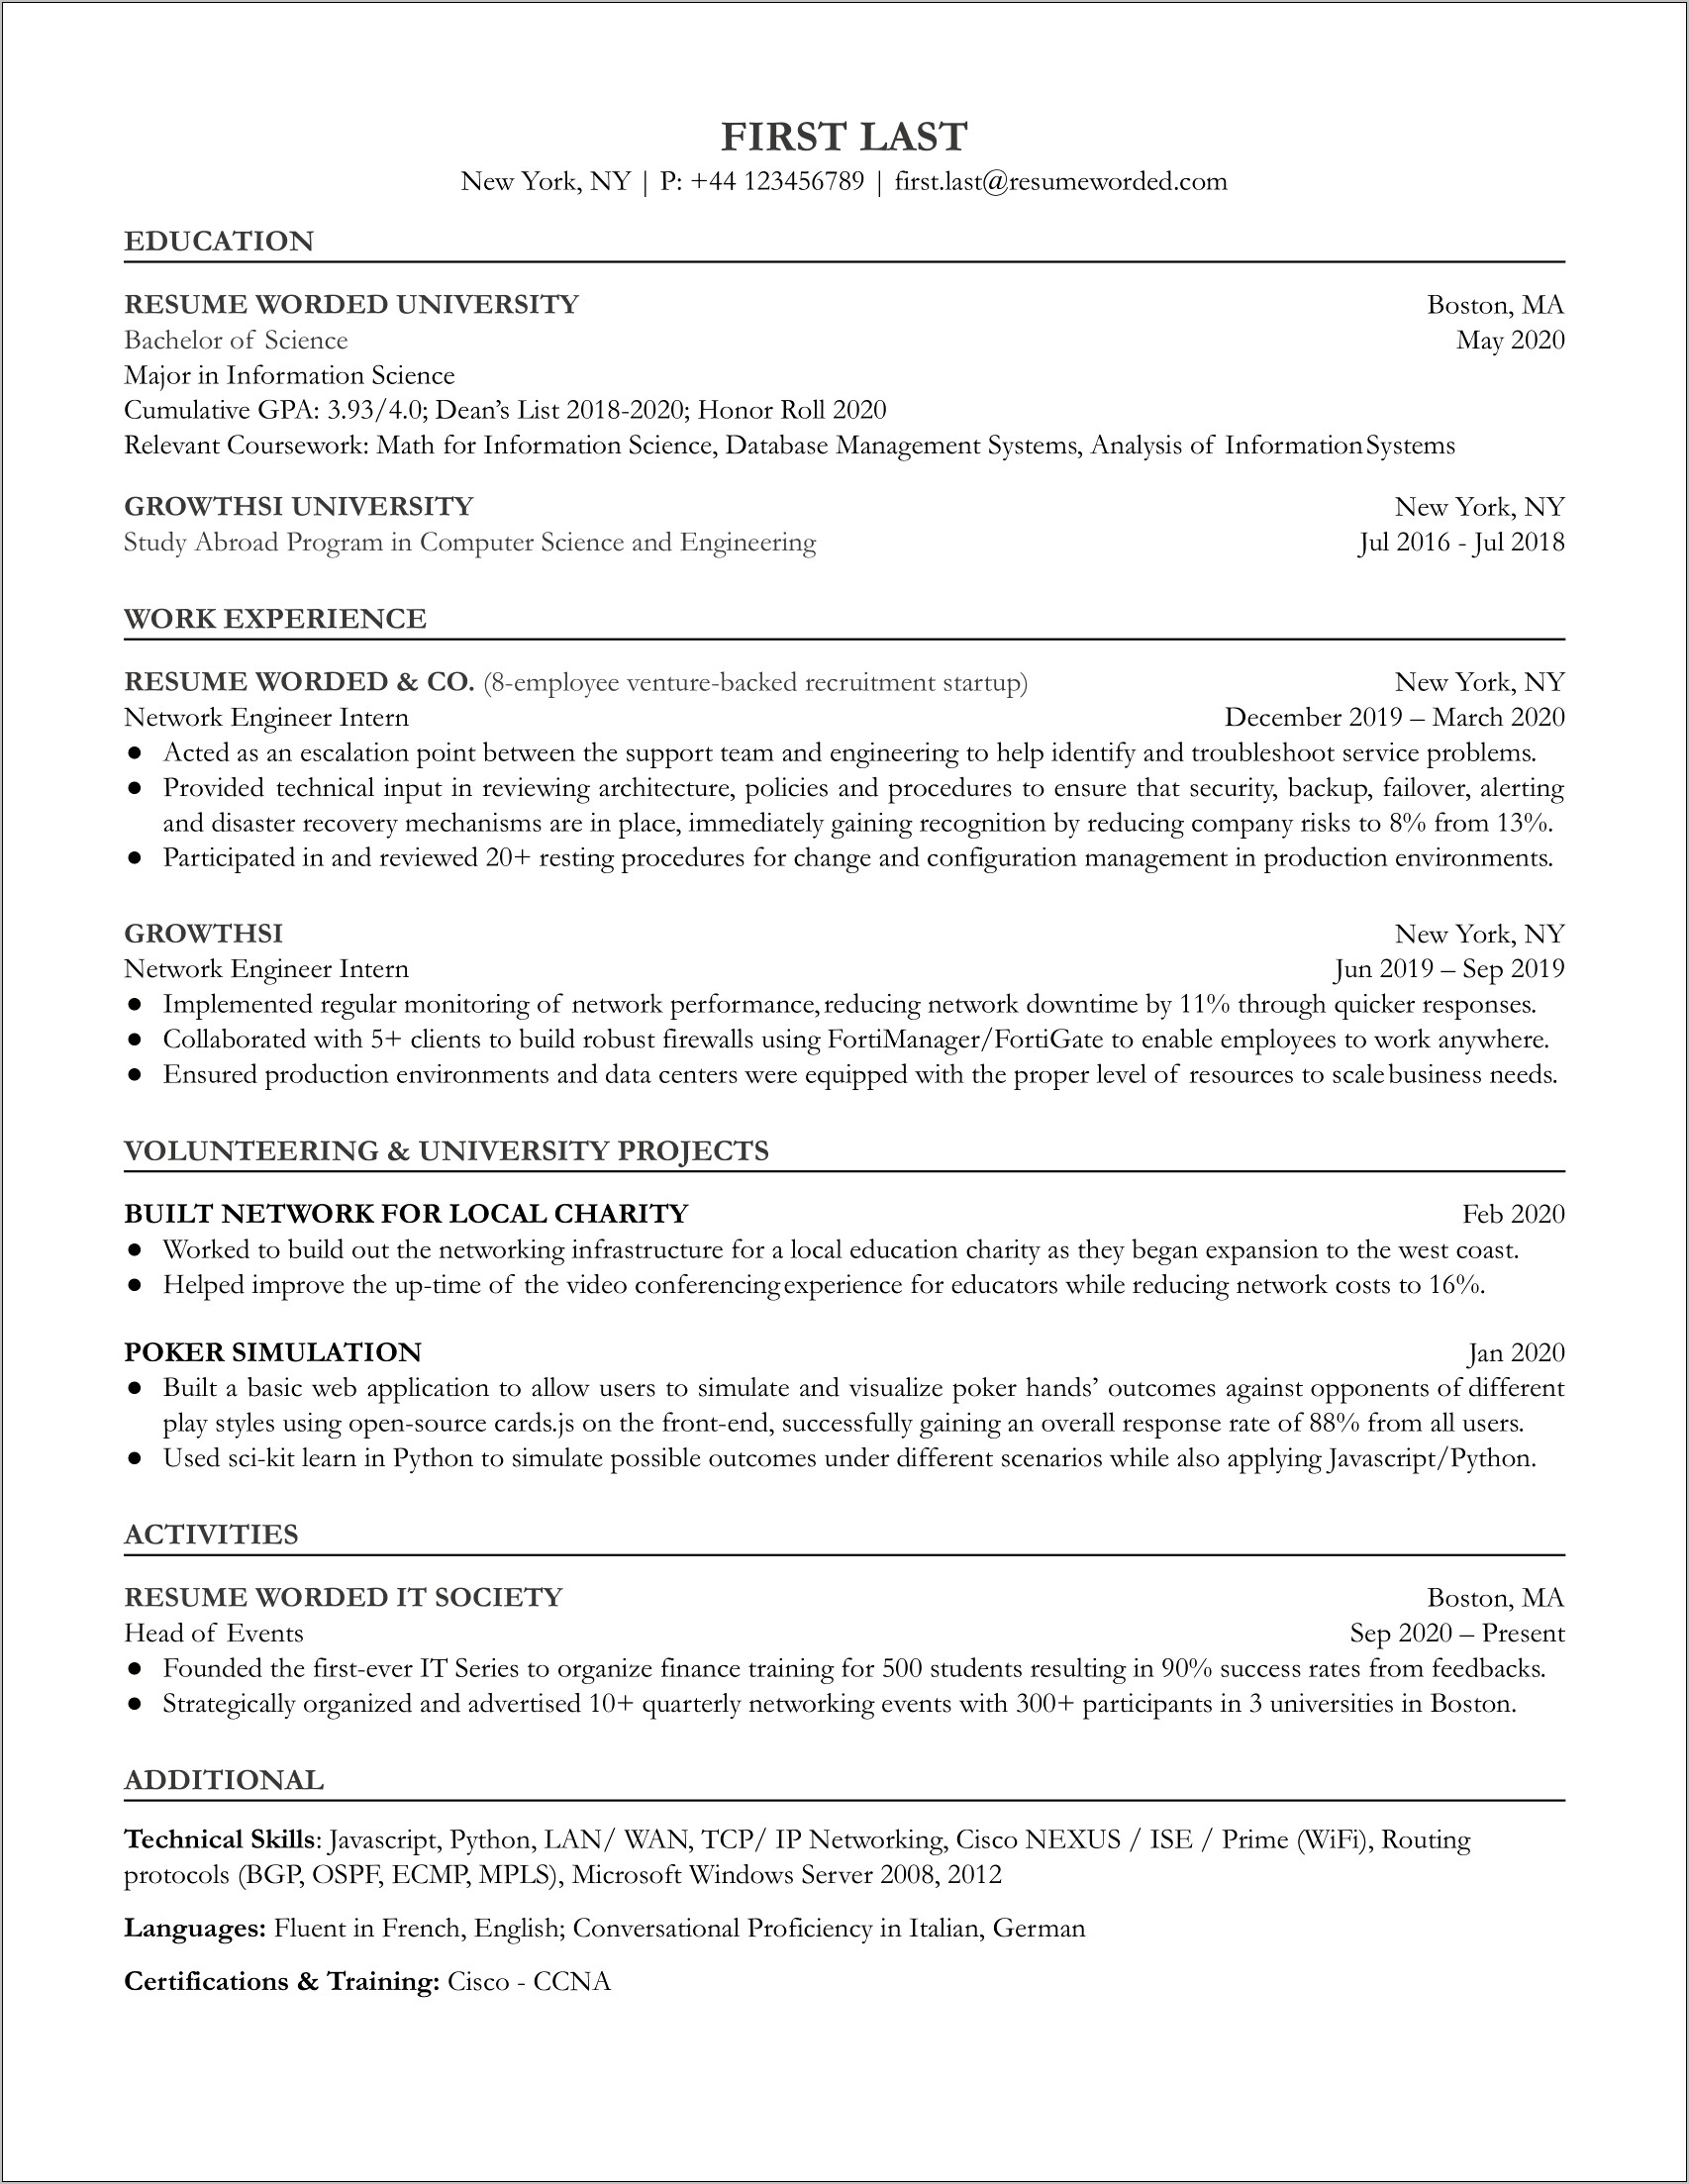 Sample Network Engineer Resume.doc